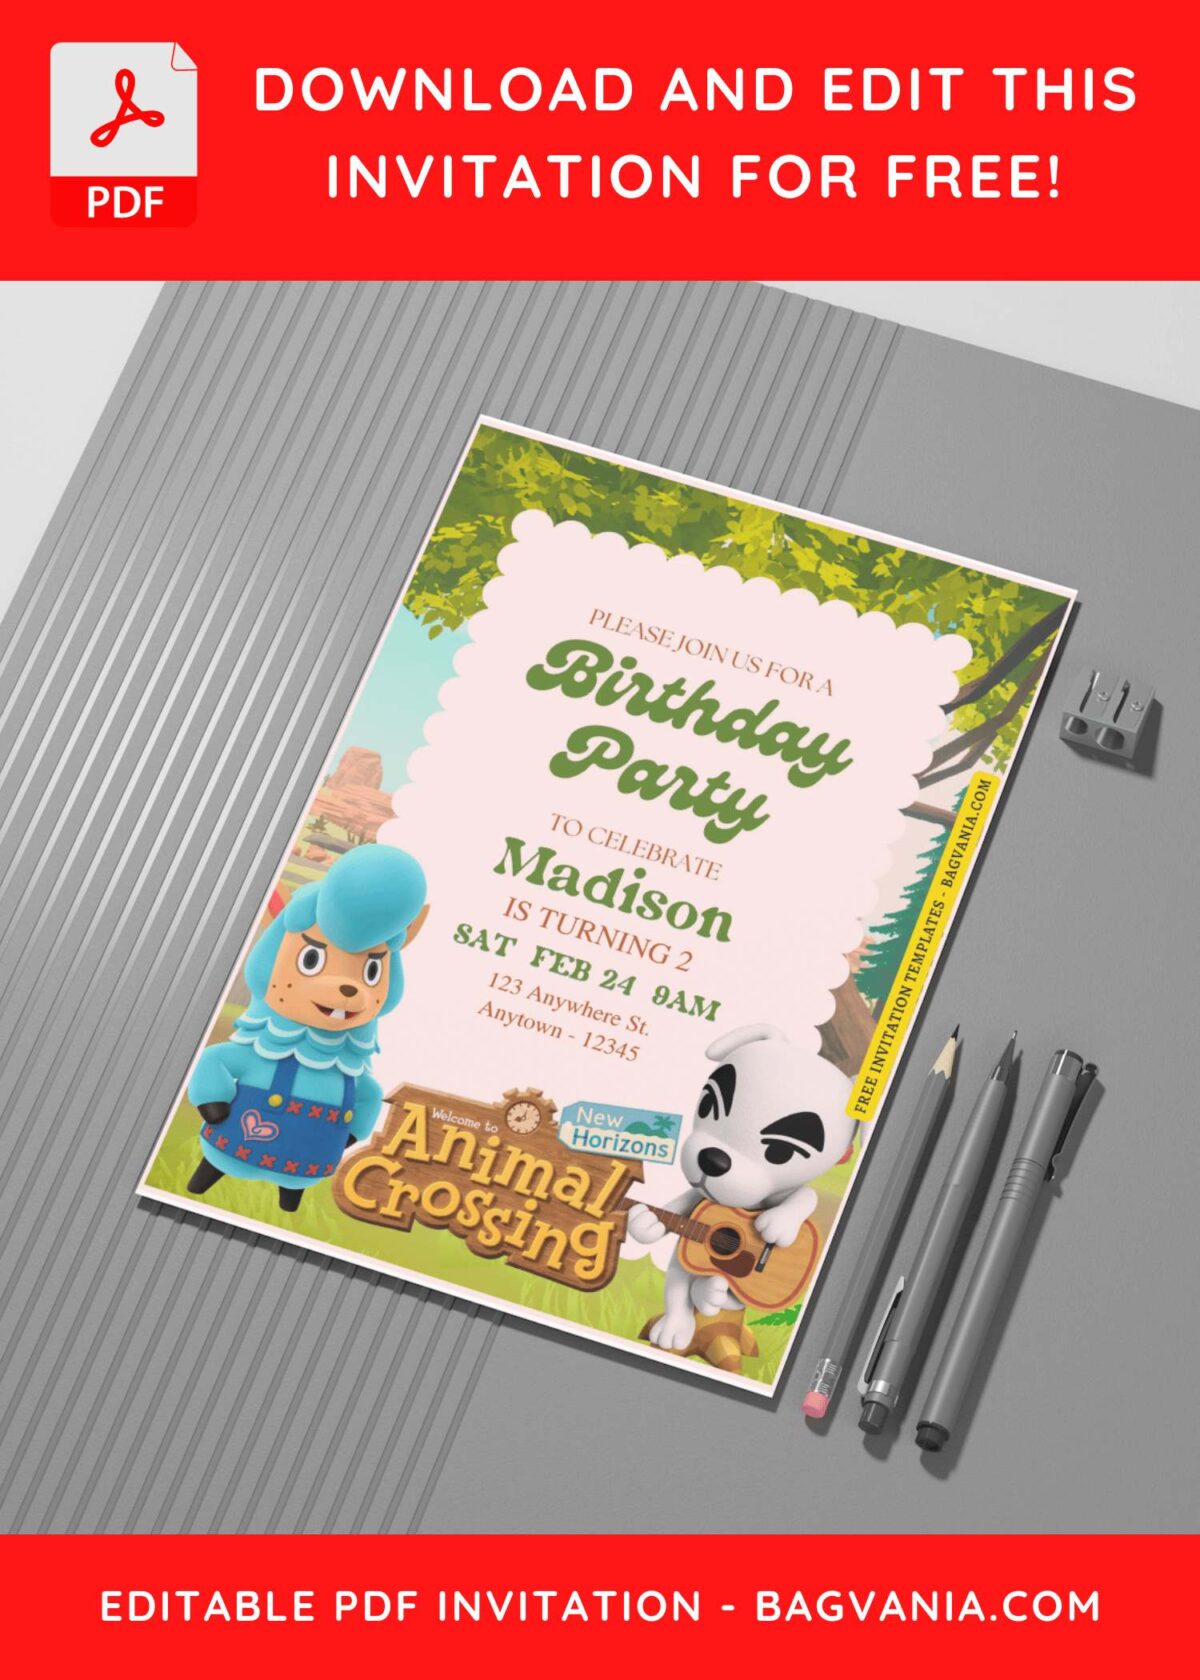 (Free Editable PDF) Whimsy Animal Crossing Birthday Invitation Templates G